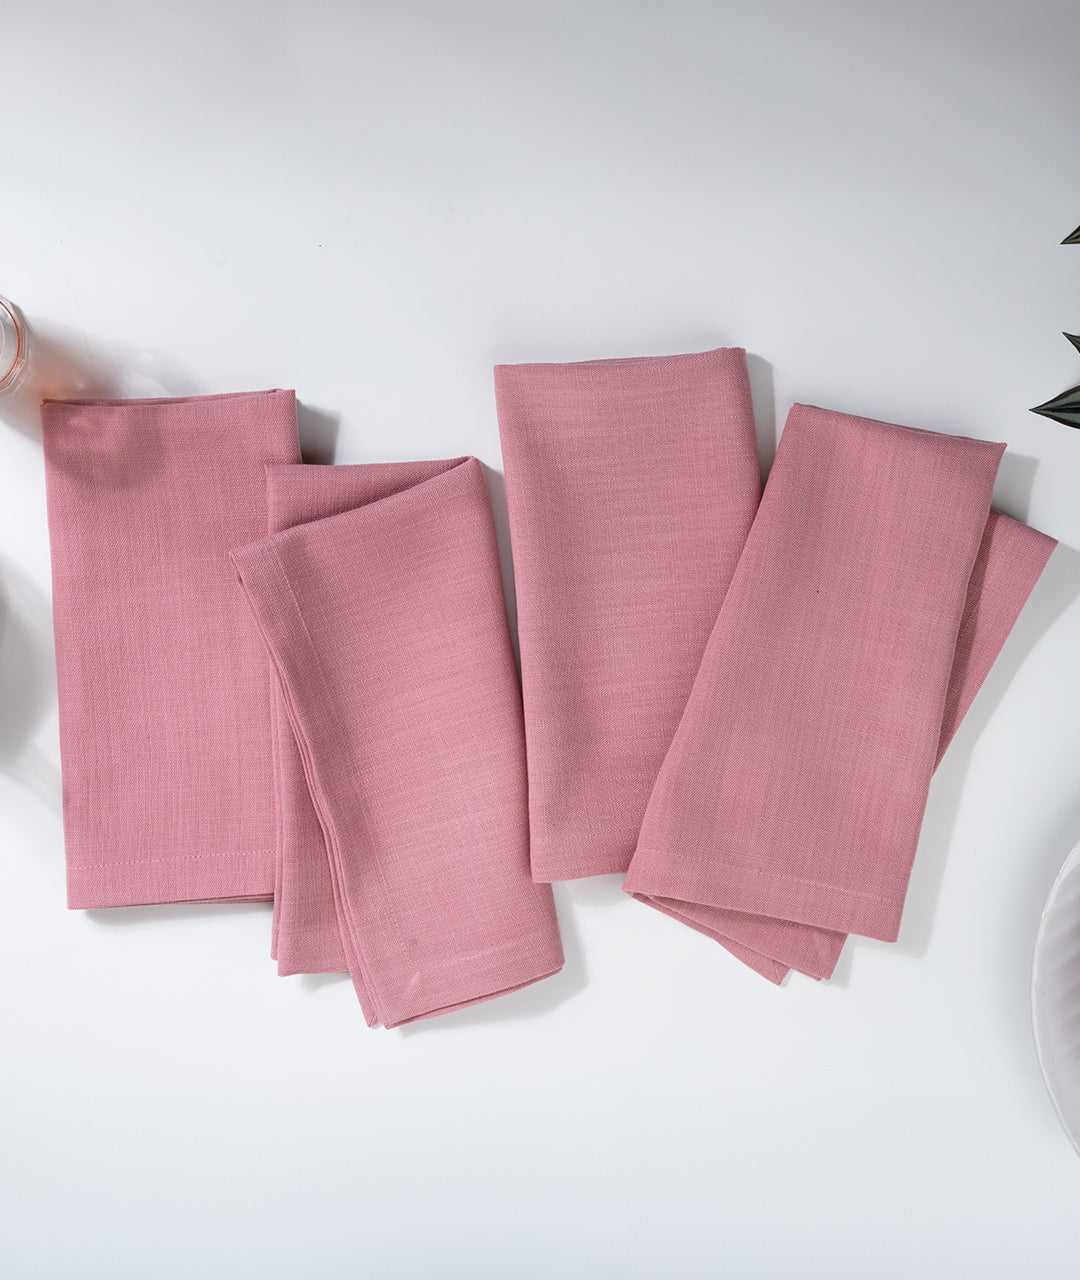 Dusty Pink Linen Textured Dinner Napkins 20 x 20 Inch Set of 4 - Mitered Corner